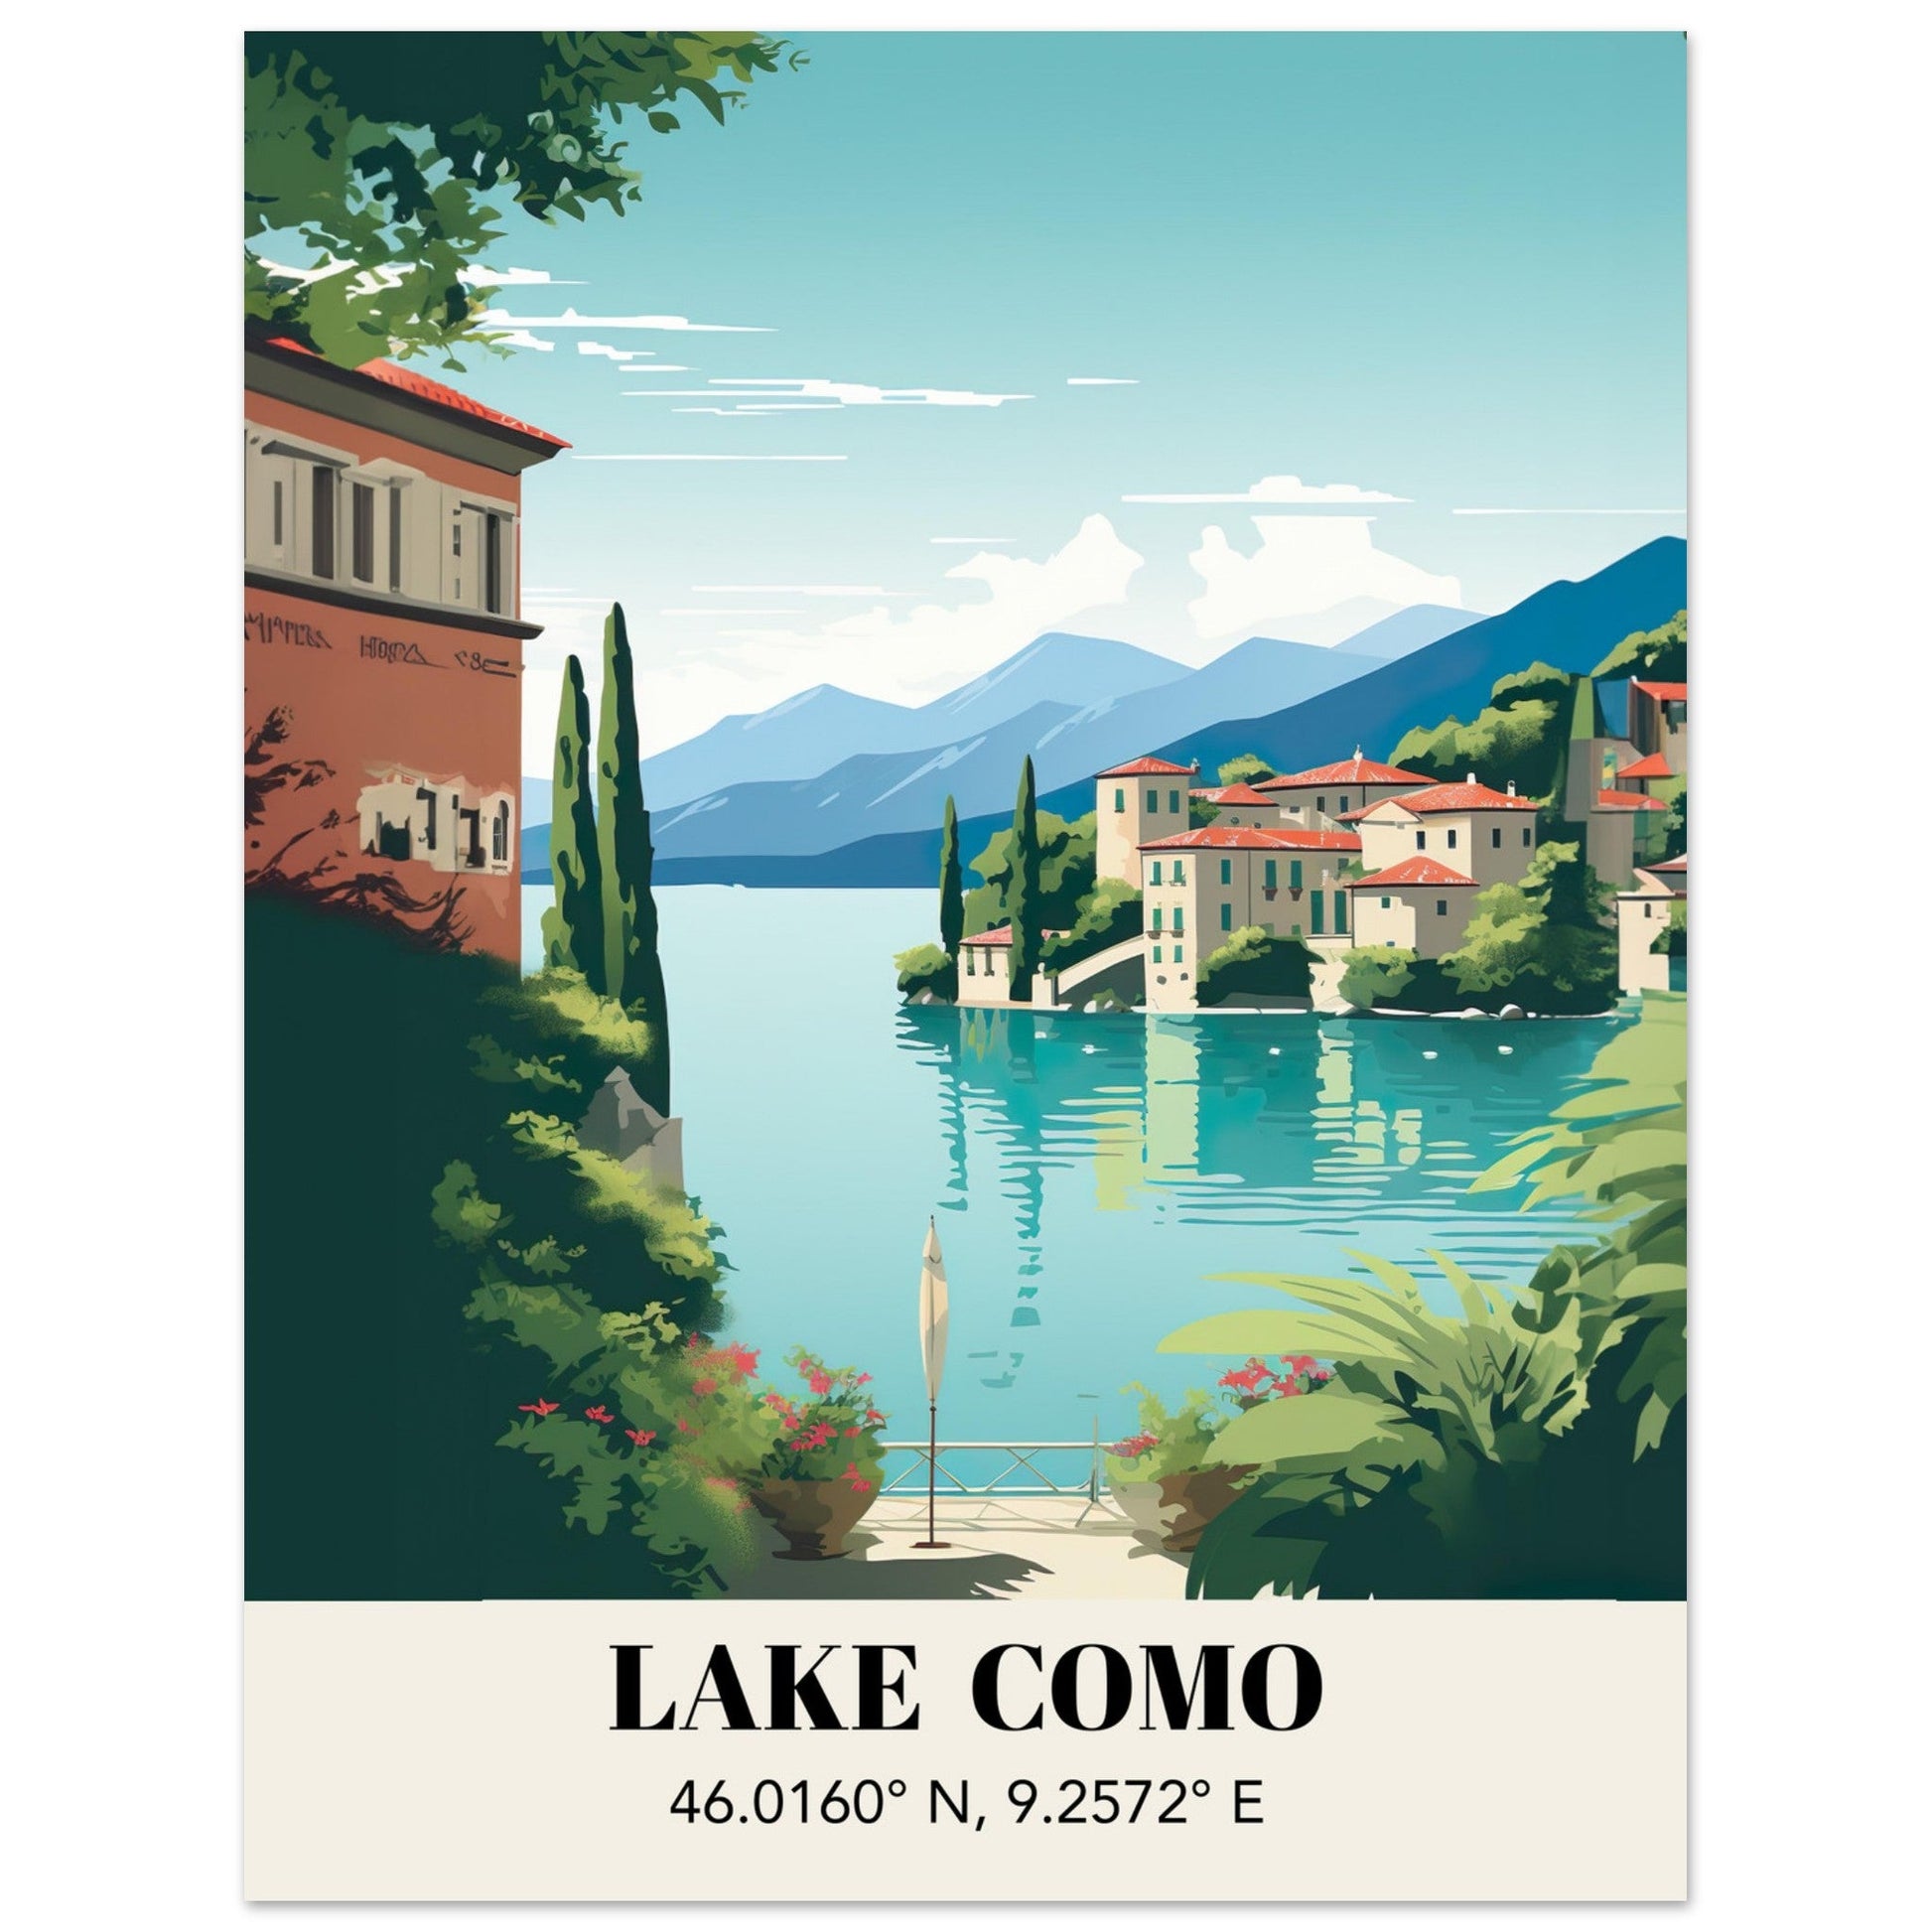 Italy - Lake Como, Lake Como, Retro Travel Poster, Travel Poster, #illieeart #